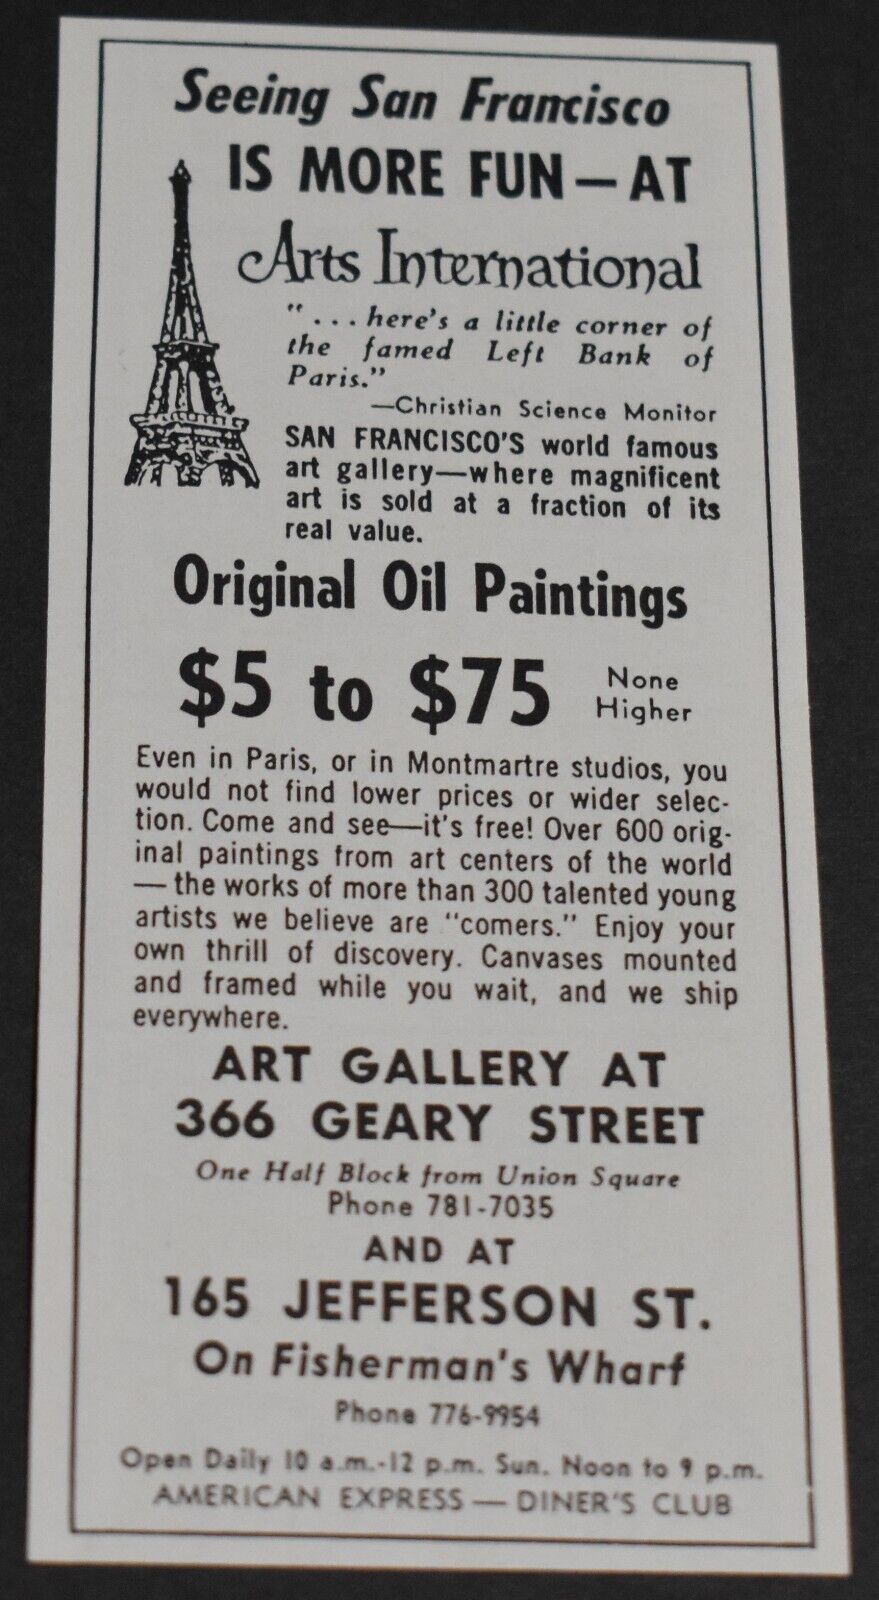 1969 Print Ad San Francisco Arts International Original Oil Paintings 366 Geary